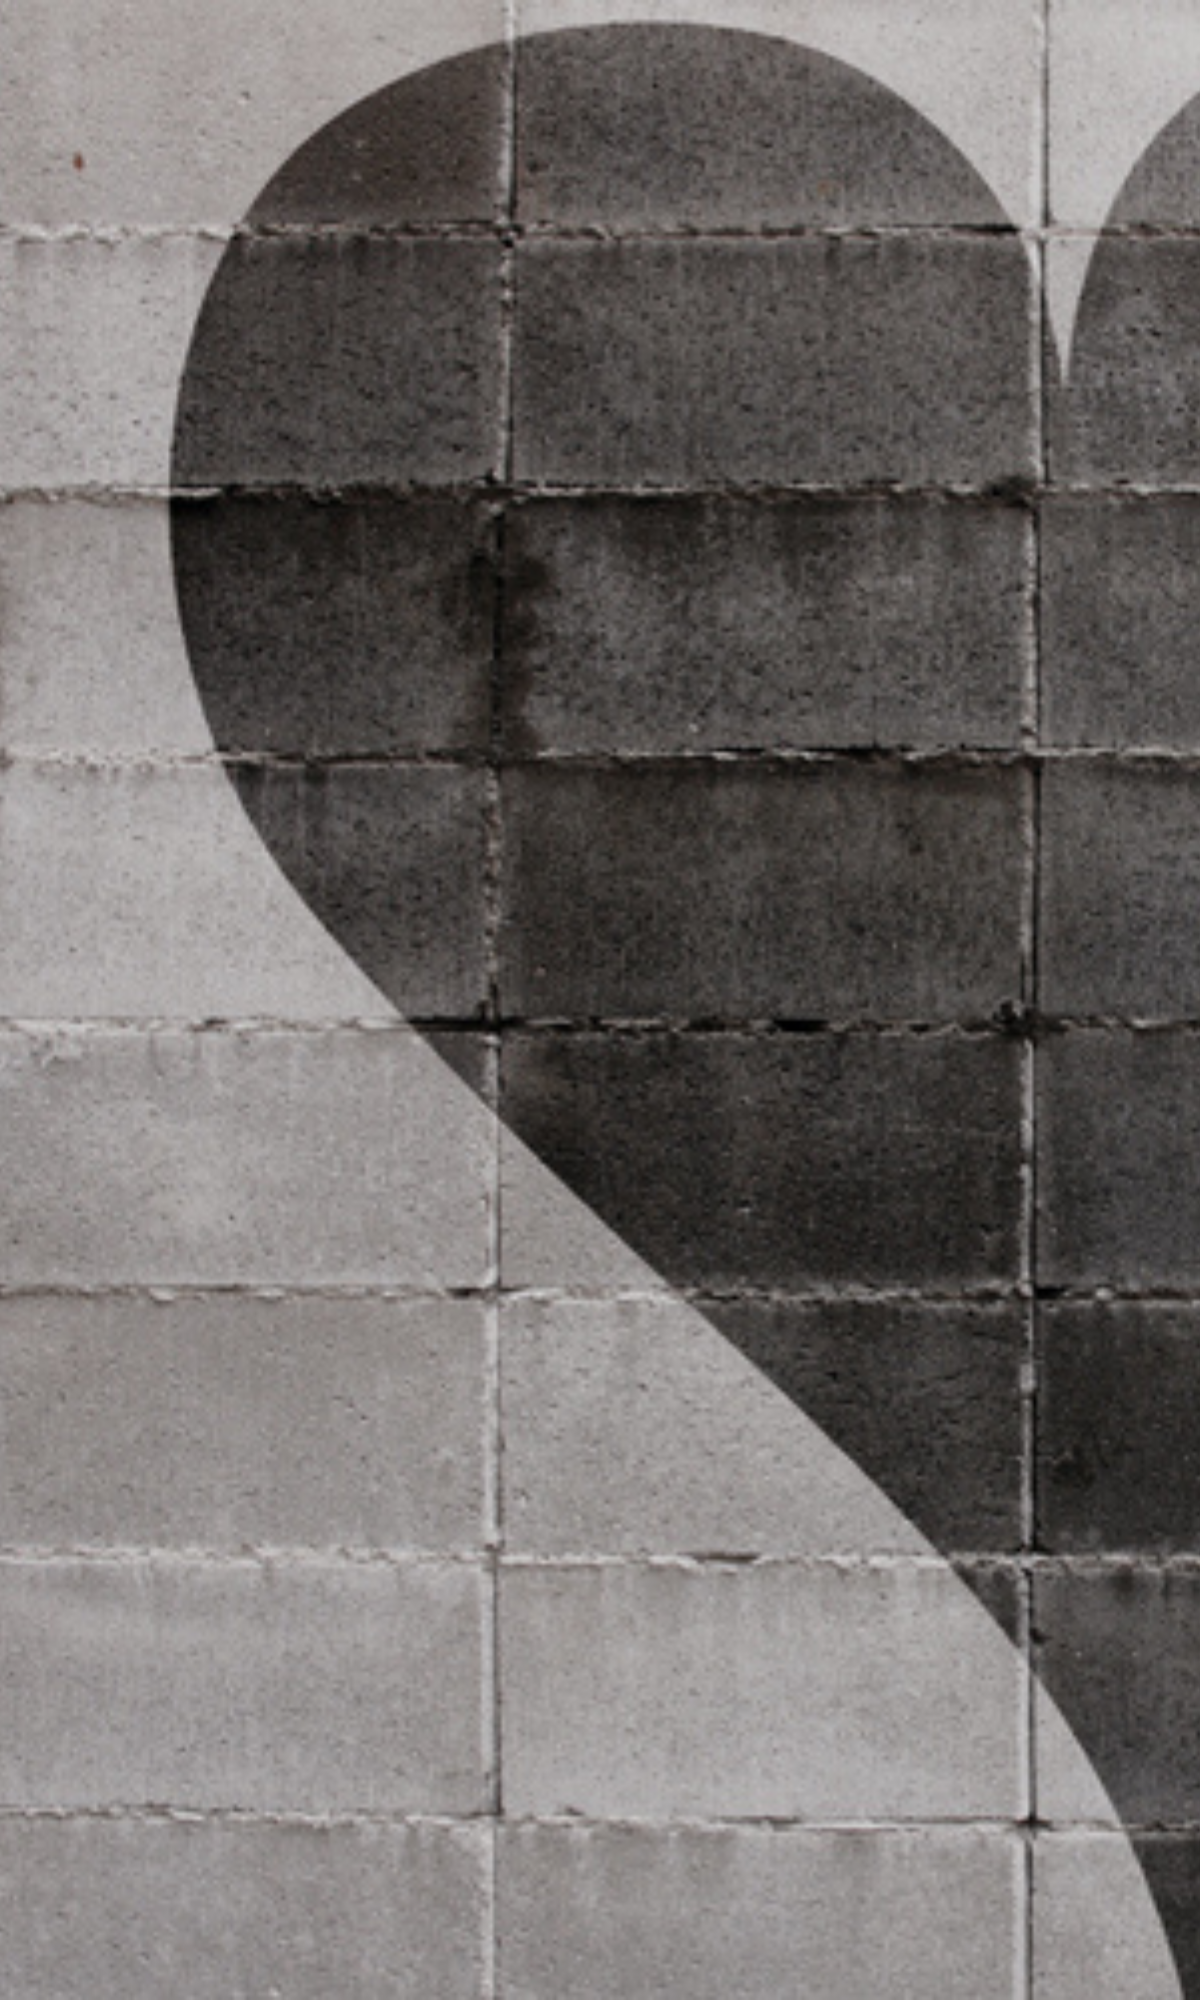 Black & White Brick Heart Digital Wallpaper M9213